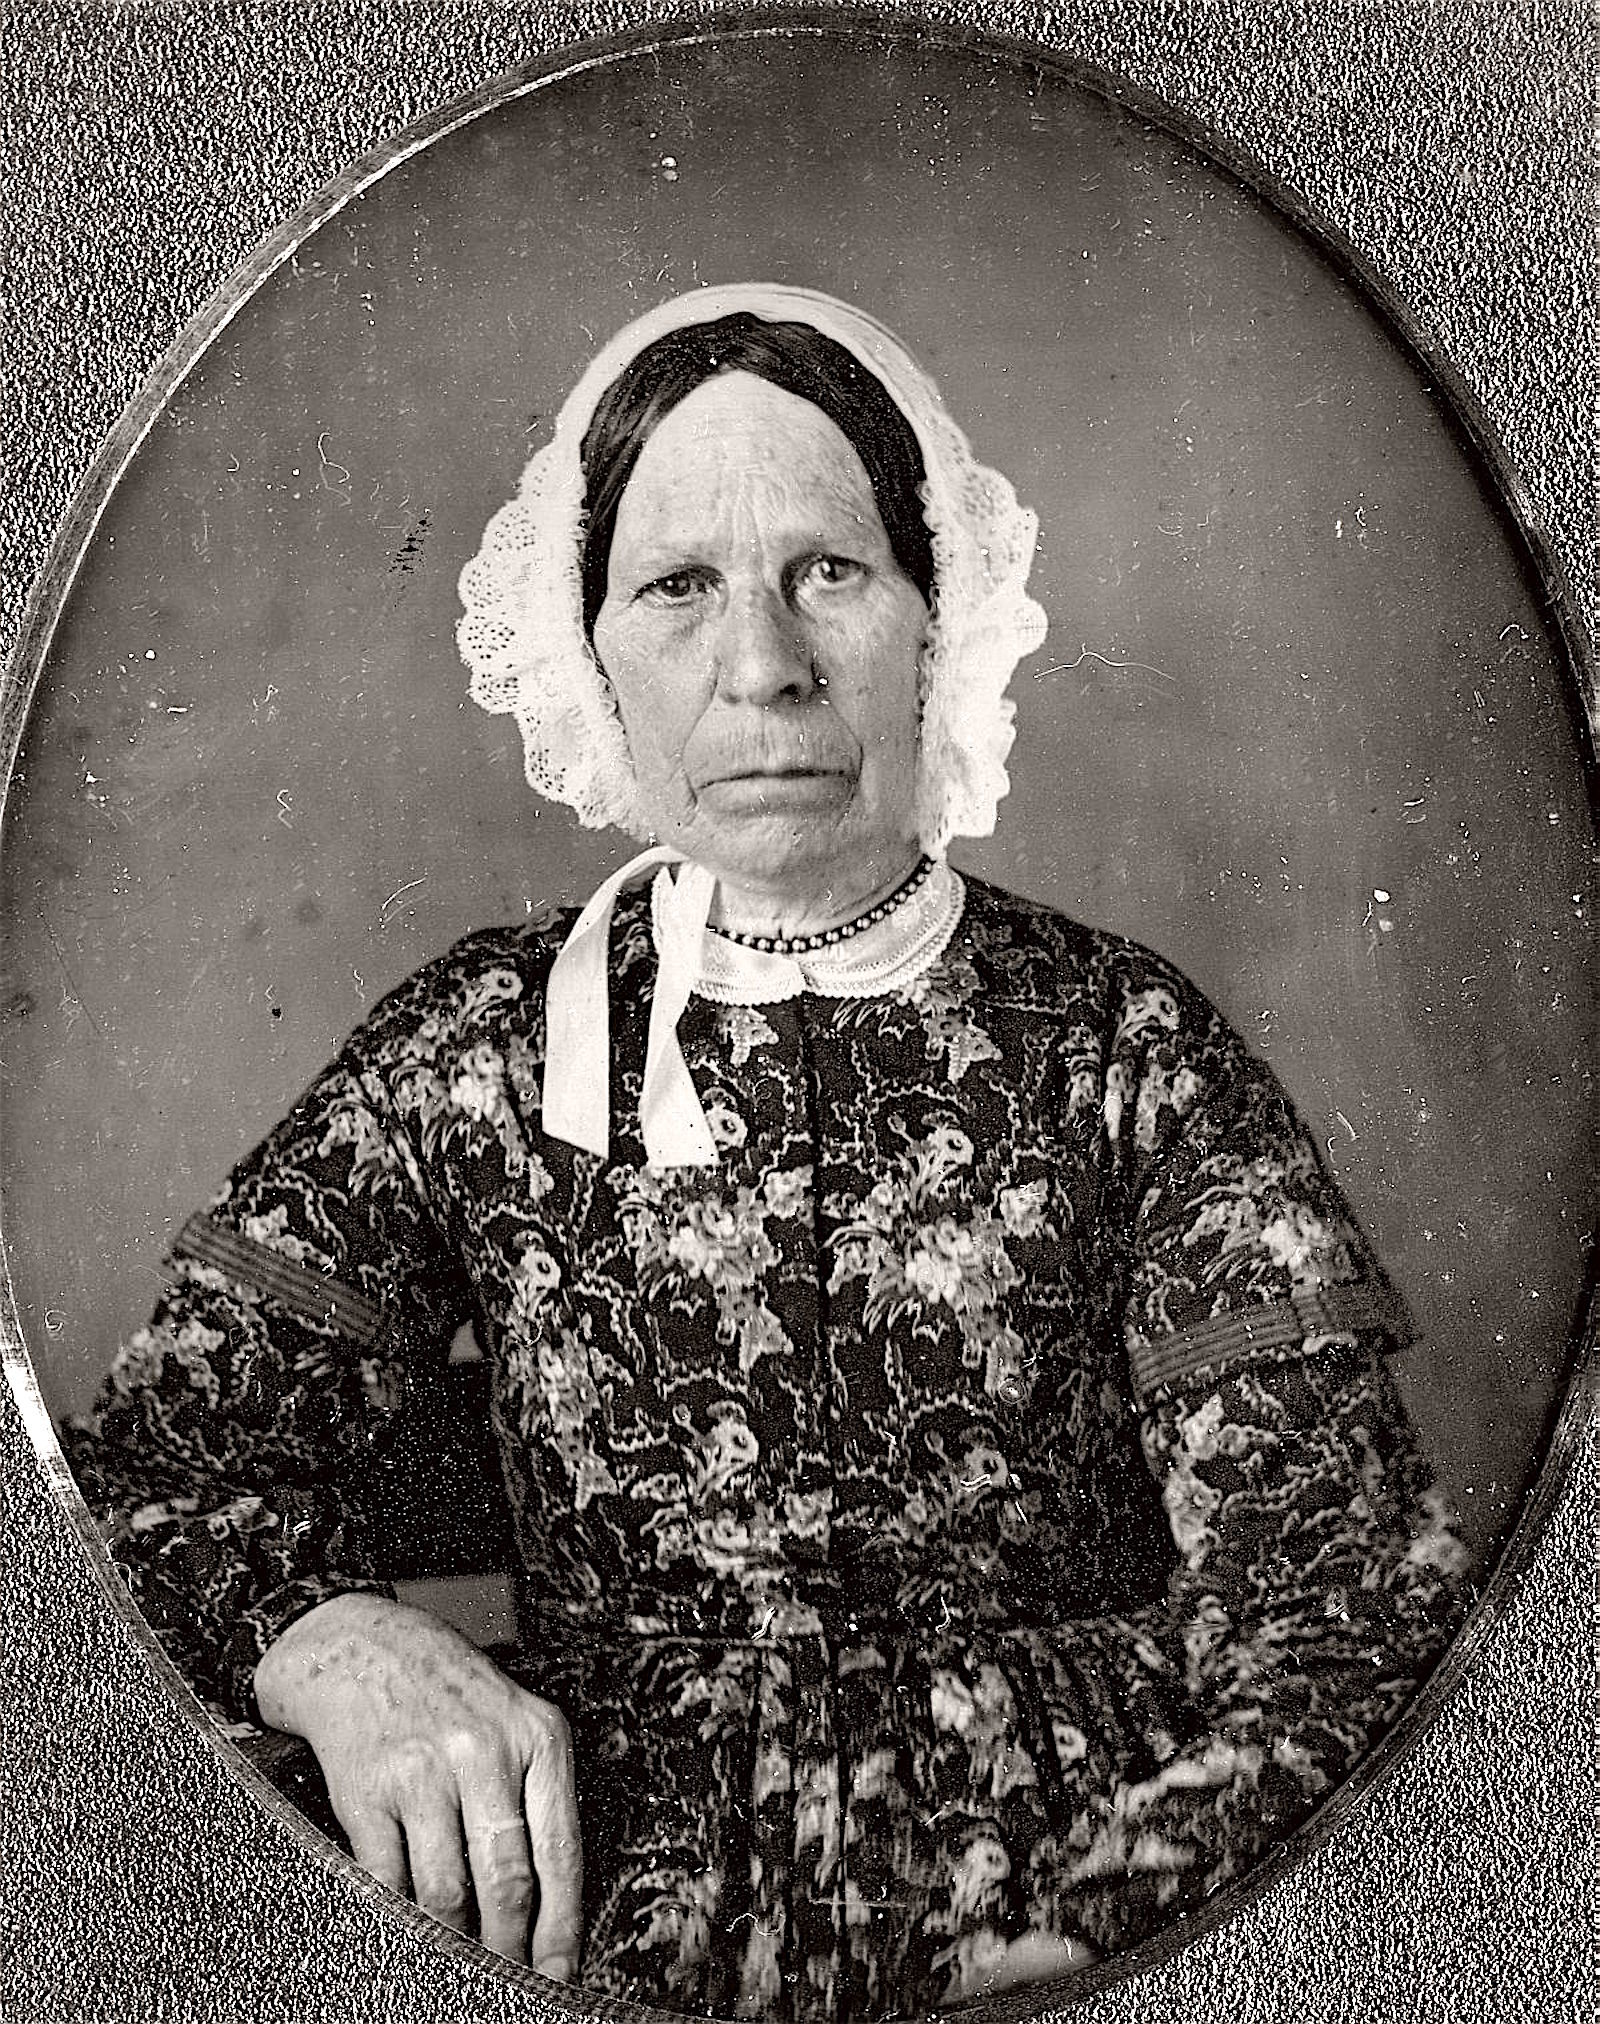 Лиц 19. Дагерротип людей 18 века. Портреты людей 18 века. Портрет бабушки. Портреты людей 19 века.